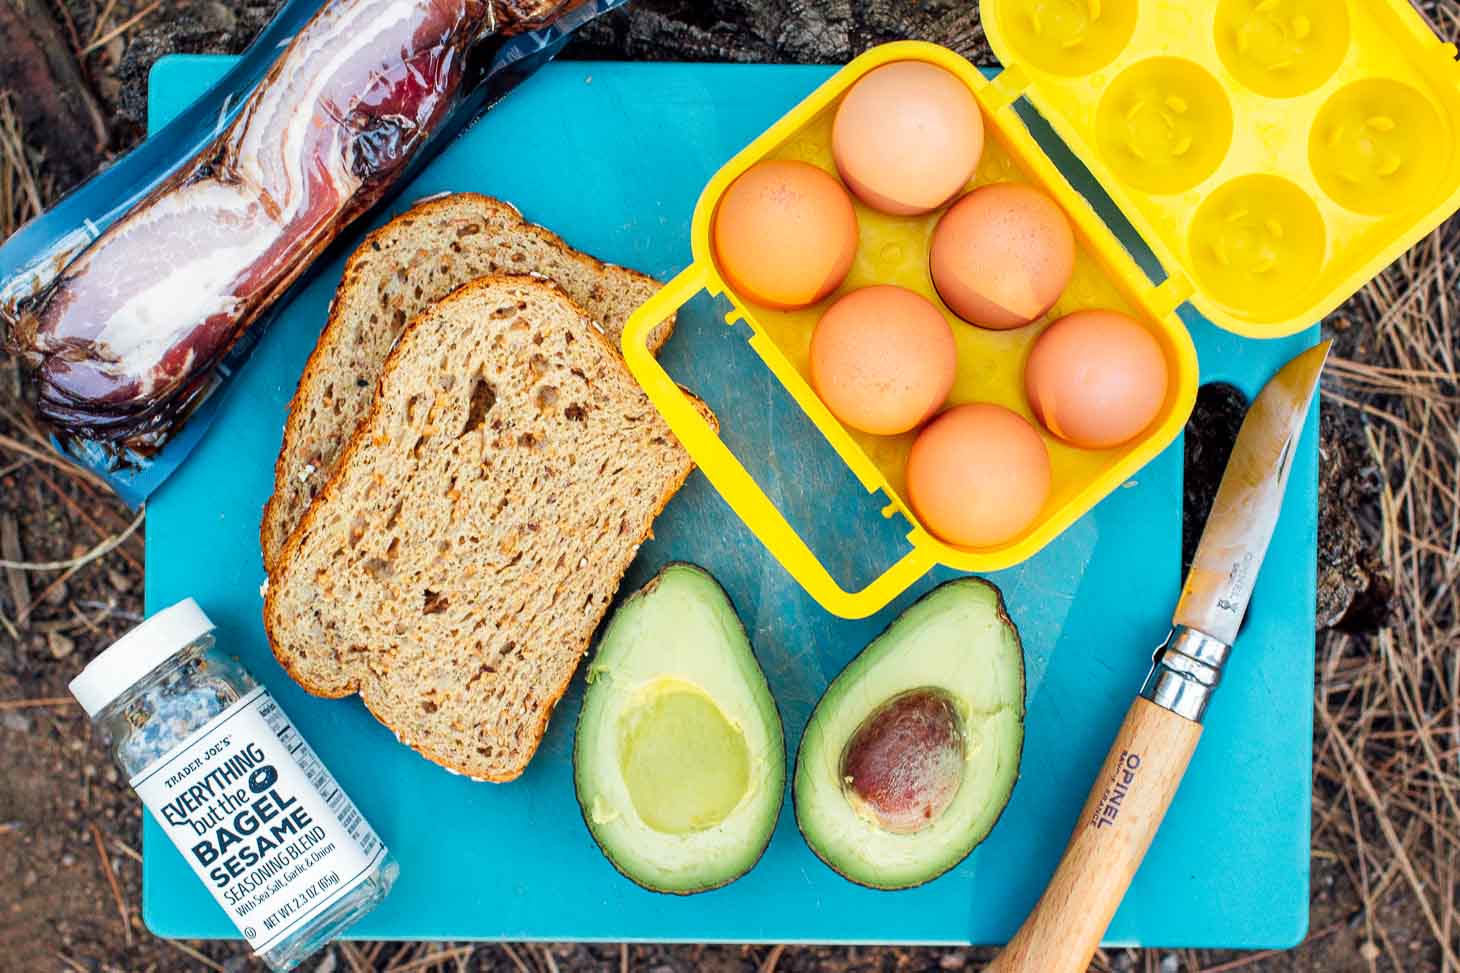 Ingredients to make an avocado toast breakfast sandwich (bacon, eggs, avocado, bread) on a blue cutting board